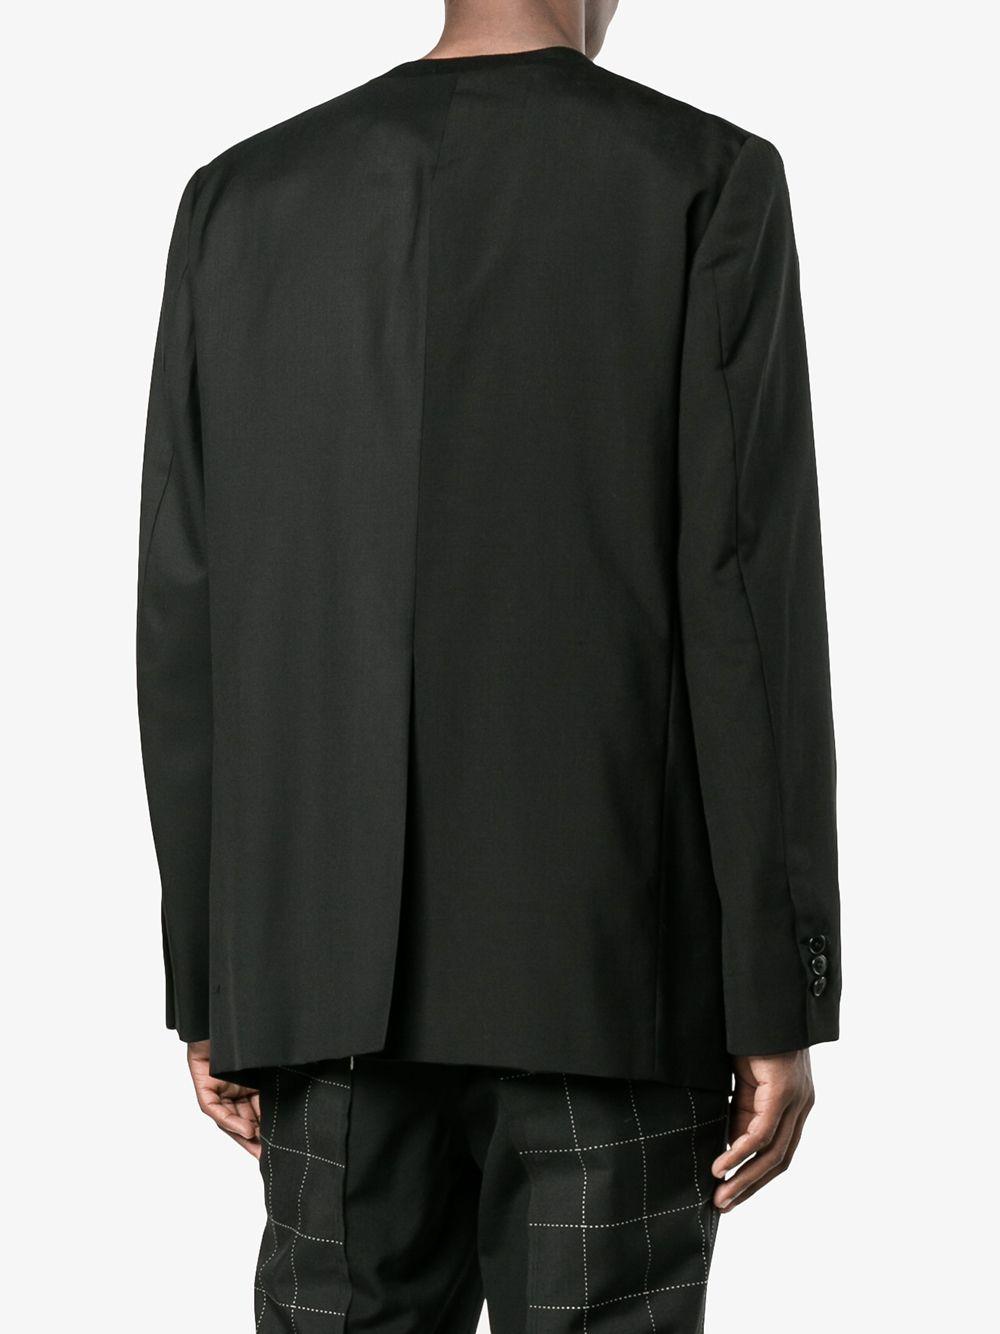 Facetasm Synthetic Asymmetric Kimono Jacket in Black for Men - Lyst